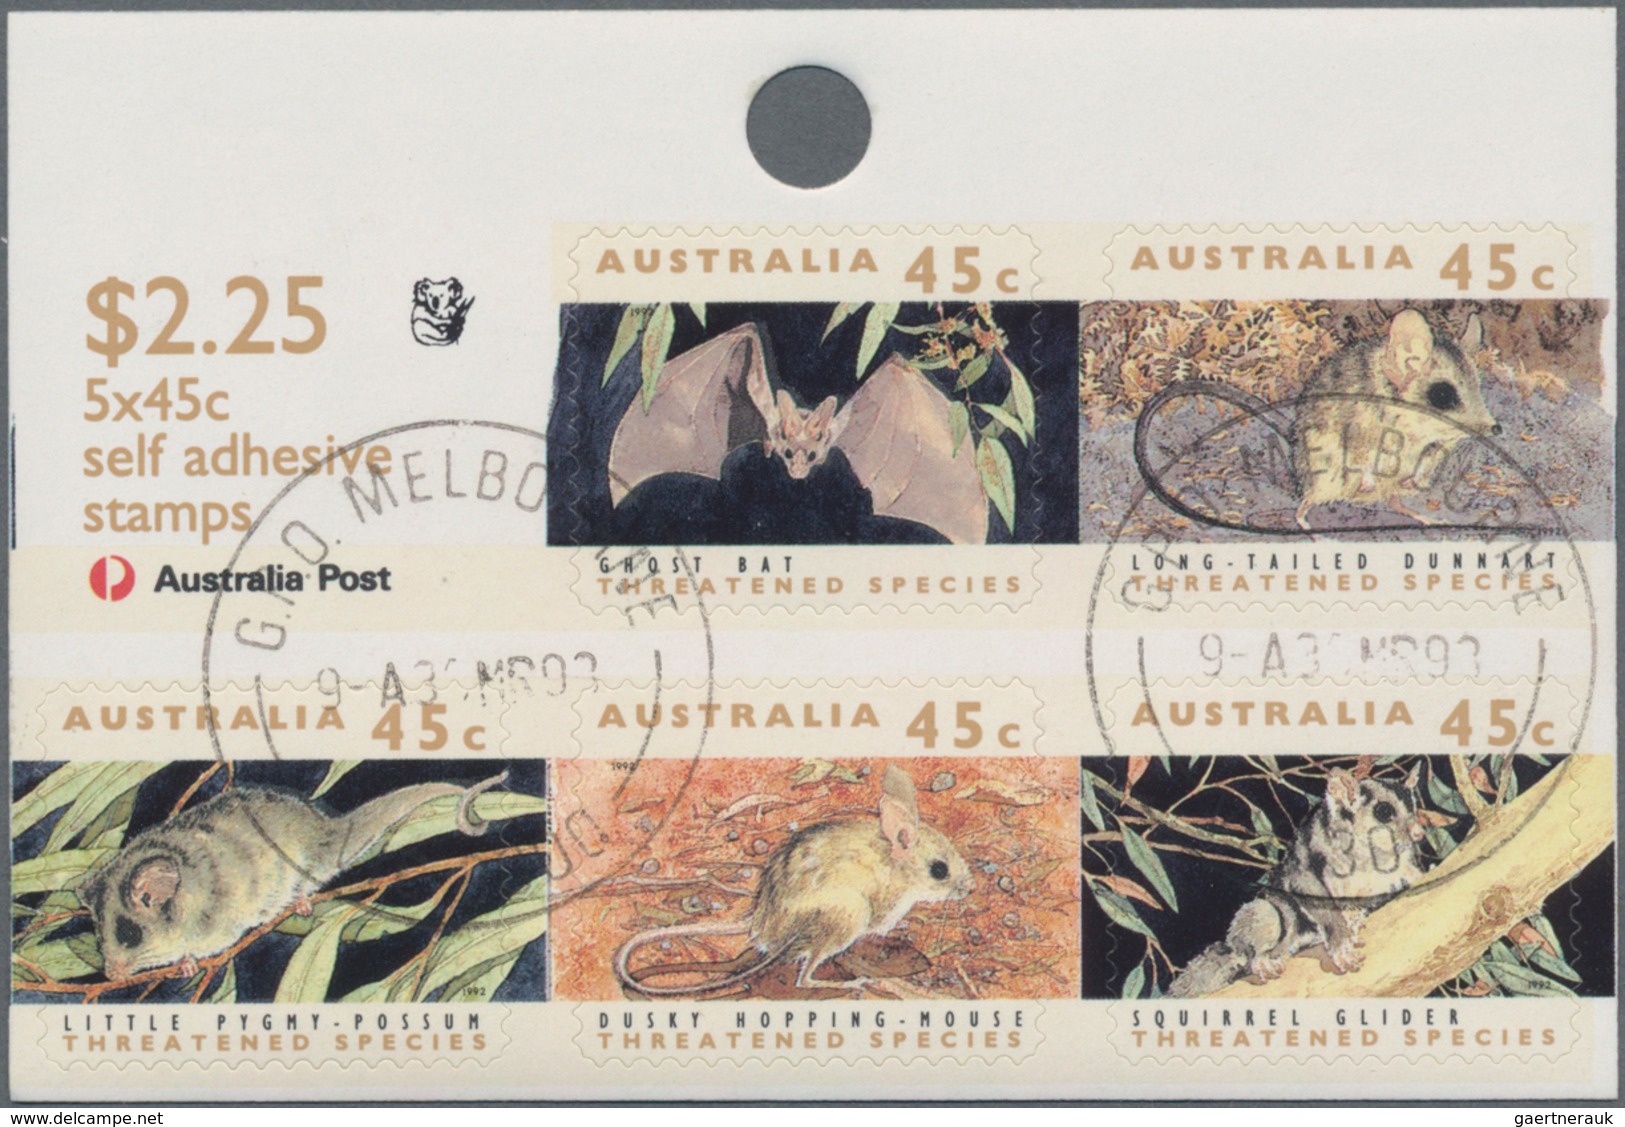 Australien - Markenheftchen: 1982/1995 (ca.), duplicated accumulation with about 600 booklets incl.